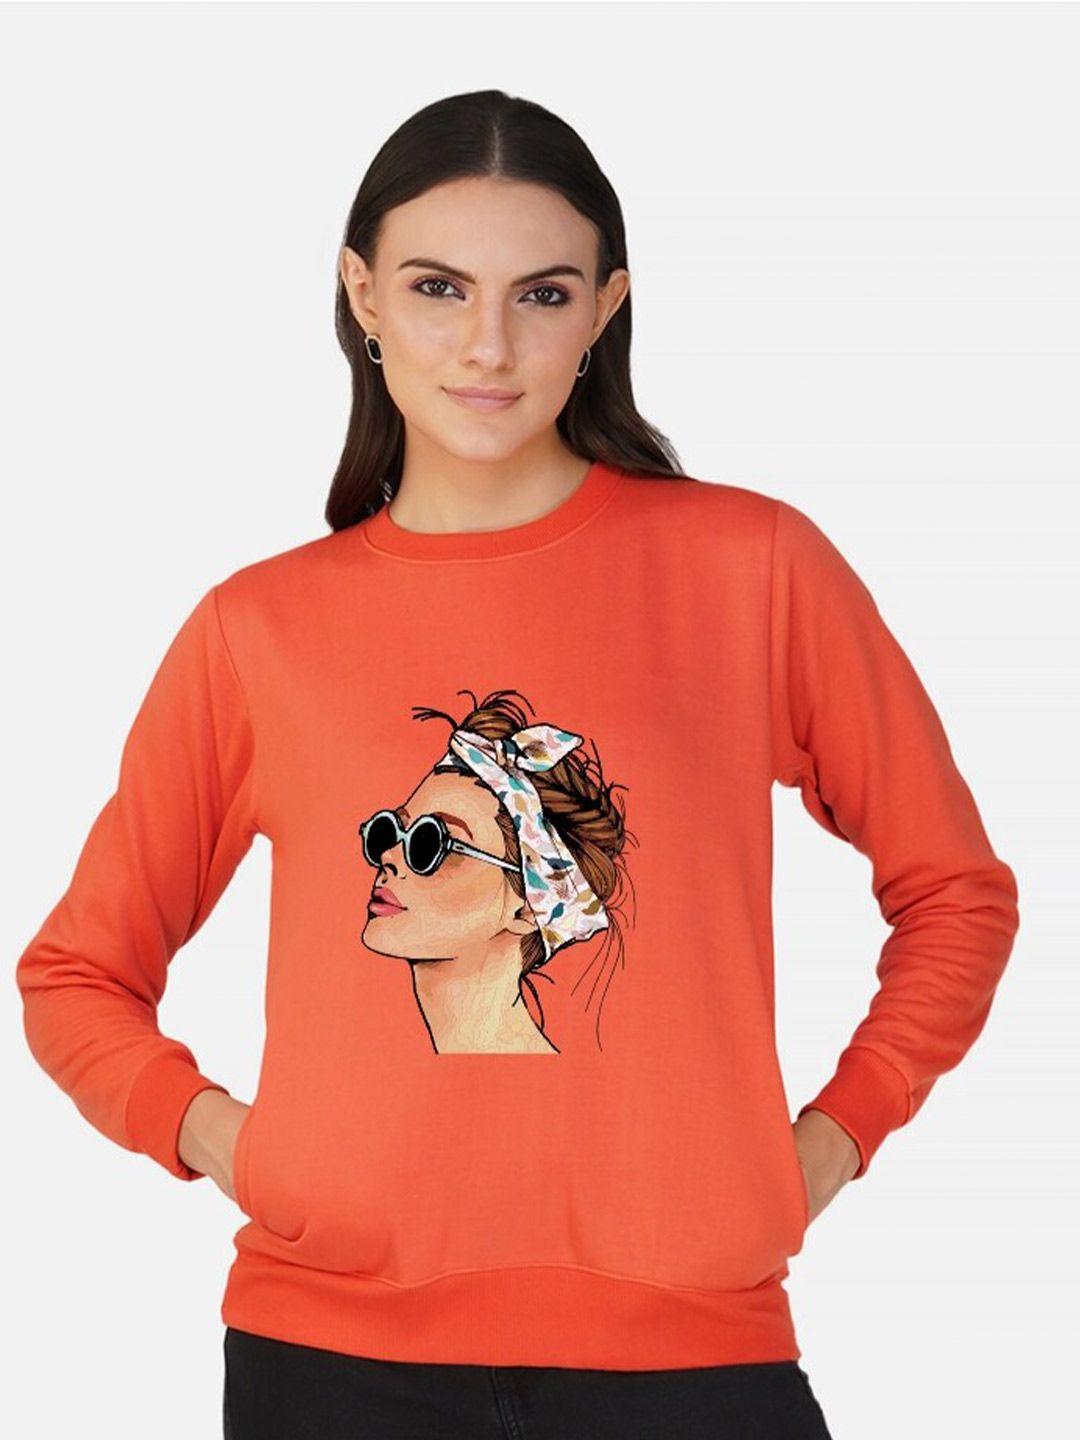 chozi graphic printed fleece pullover sweatshirt